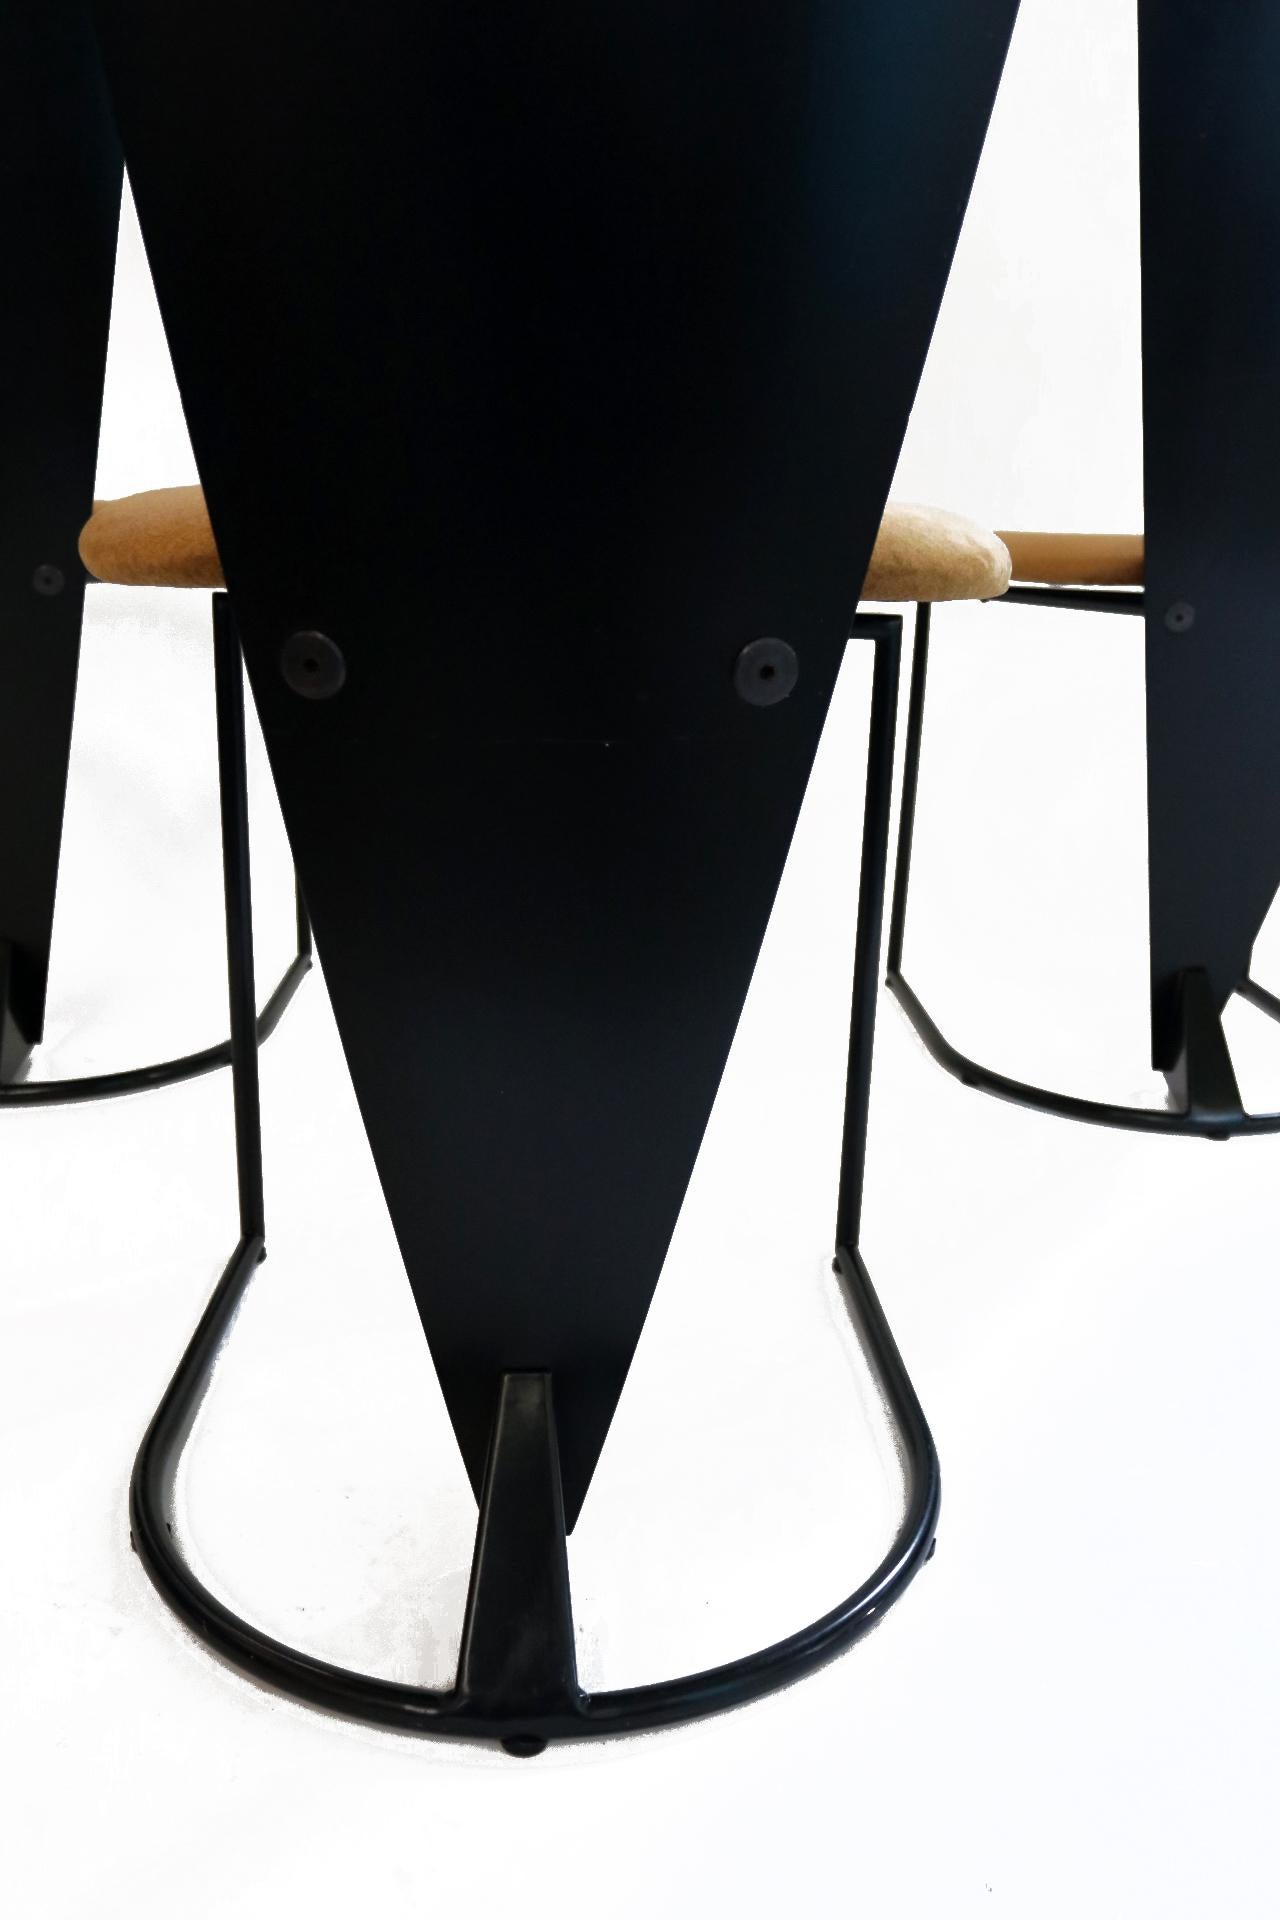 4 Dutch Design Harvink Zino Memphis Design Chairs Gold Black 1